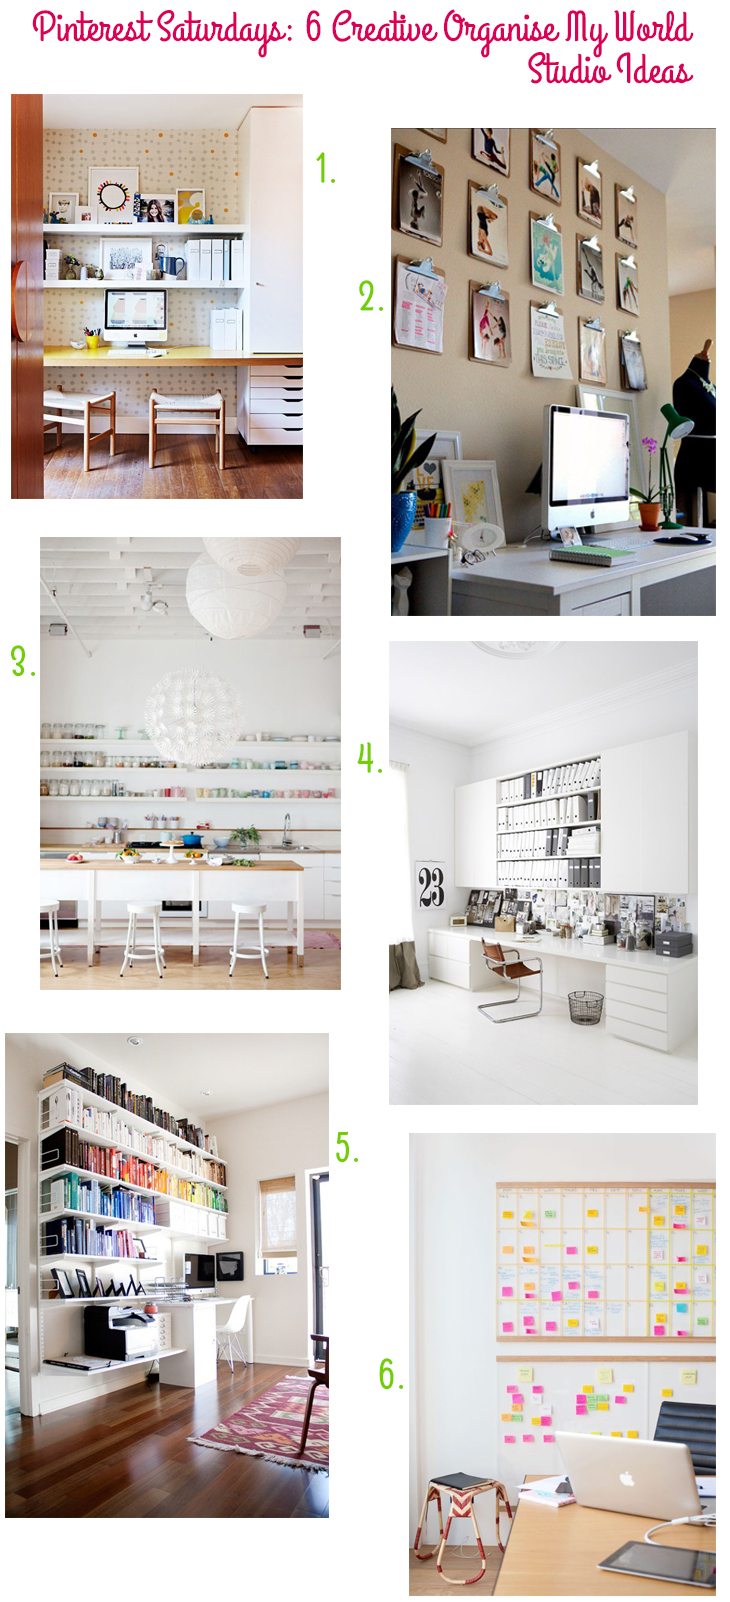 Pinterest Saturdays: 6 Creative Organise My World Studio Ideas on Style for a Happy Home